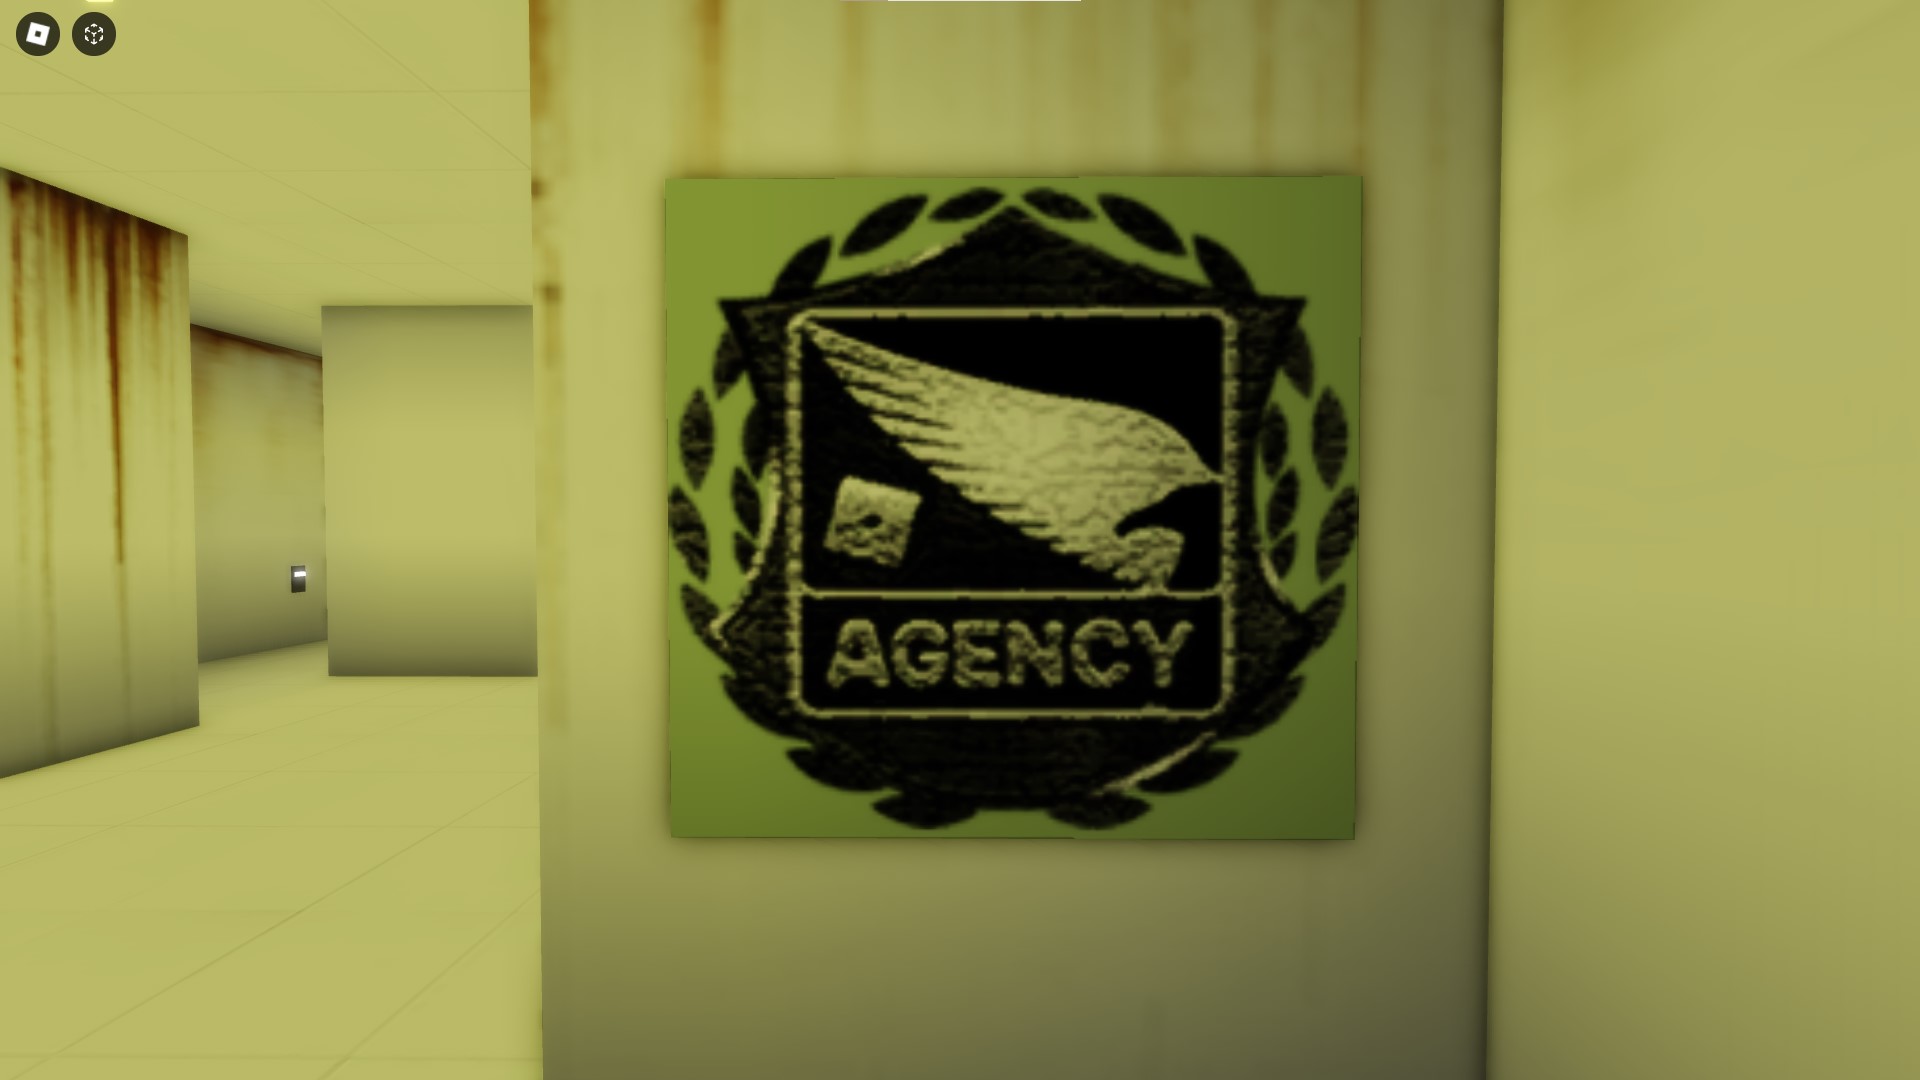 Agency Logo found in Agency Bunker